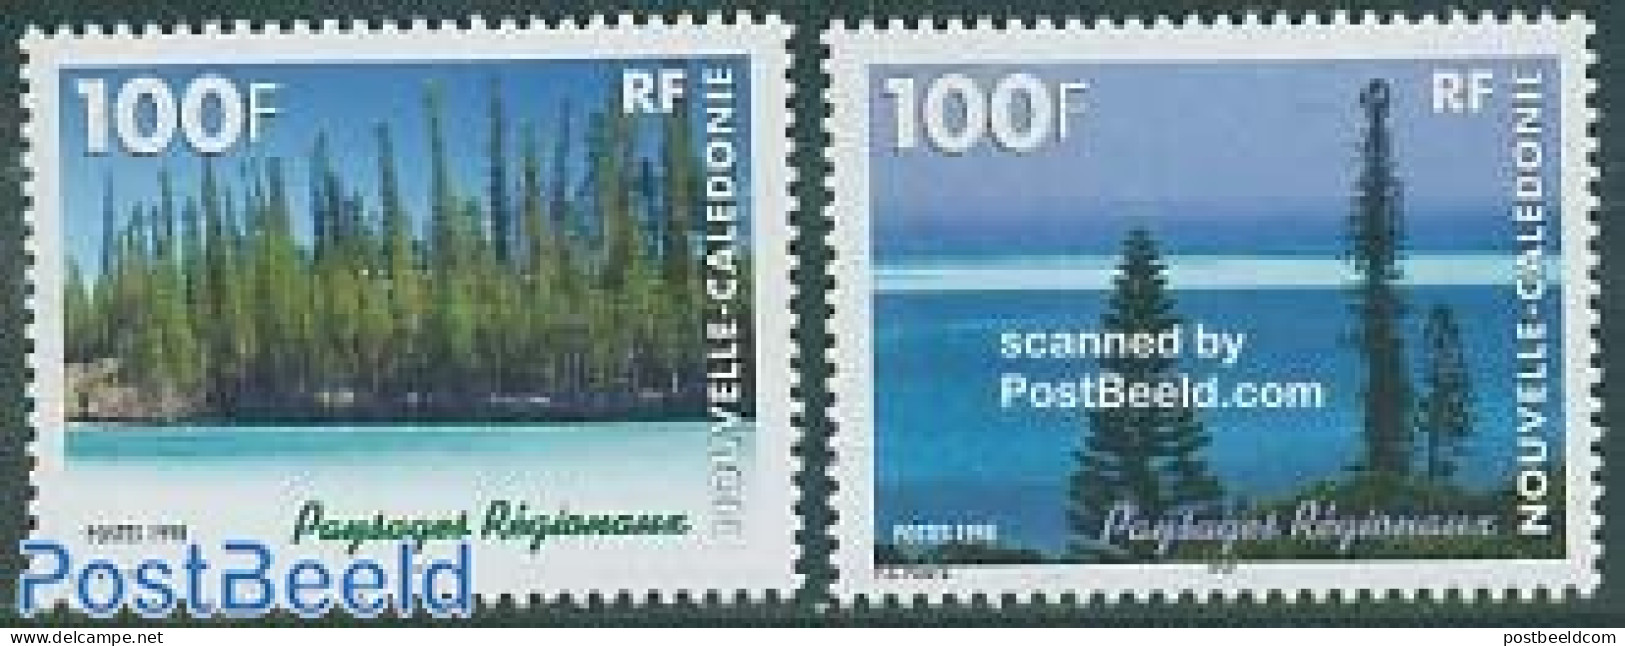 New Caledonia 1998 Landscapes 2v, Mint NH - Ungebraucht